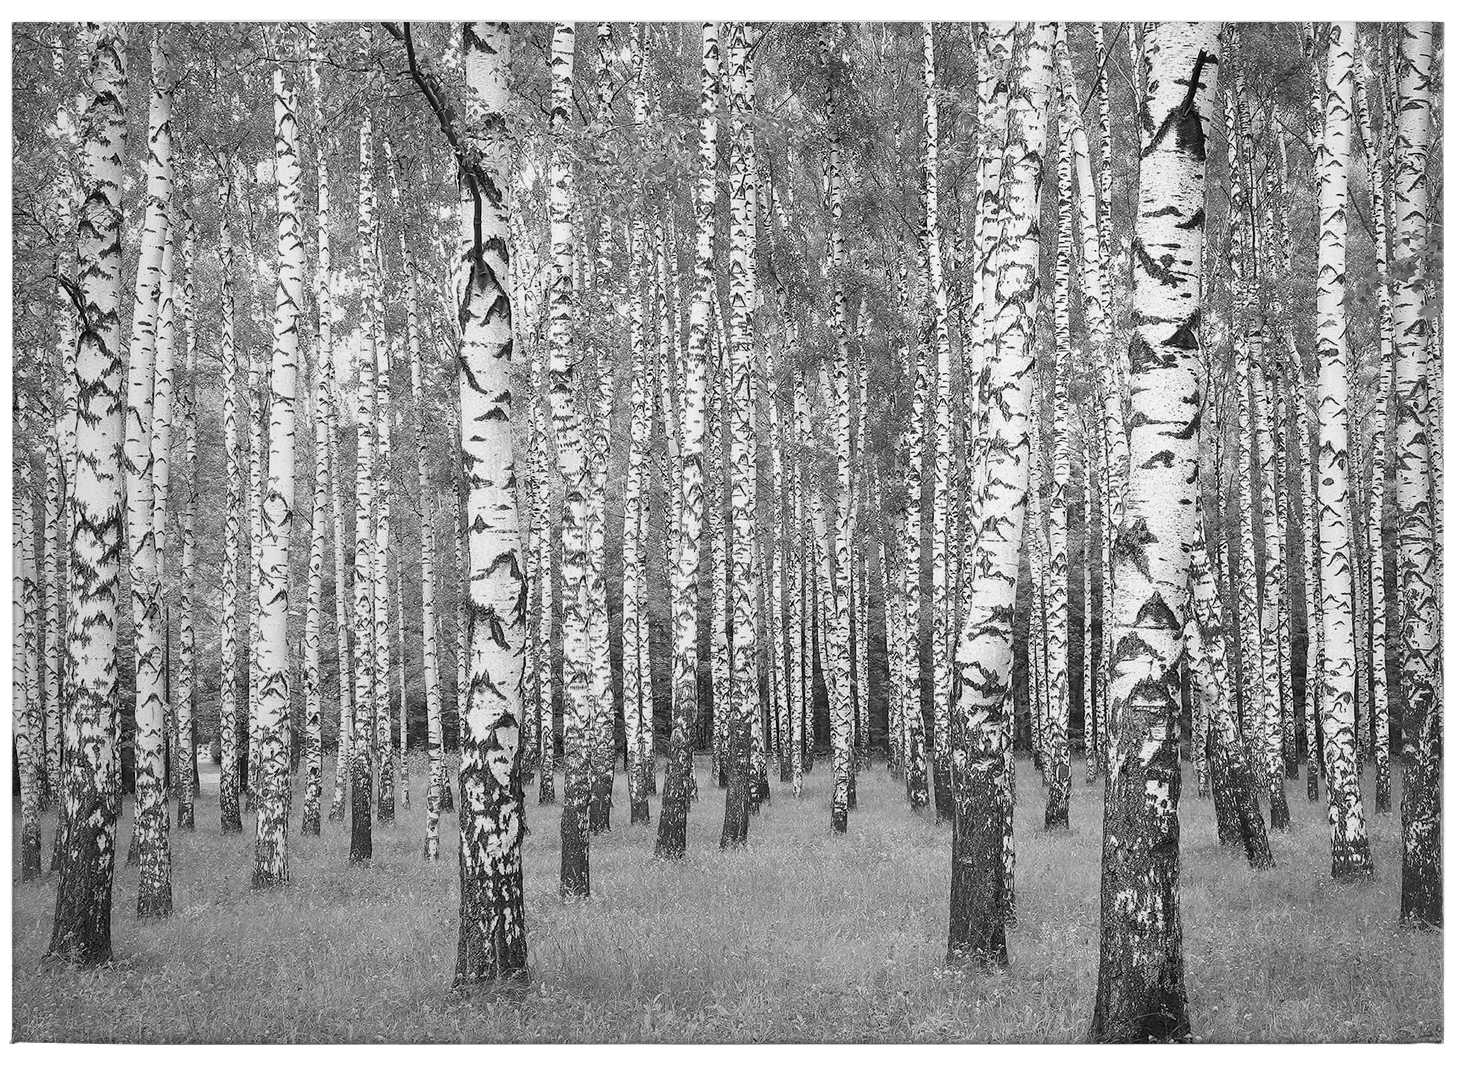             Birkenwald Leinwandbild Schwarz-Weiß – 0,70 m x 0,50 m
        